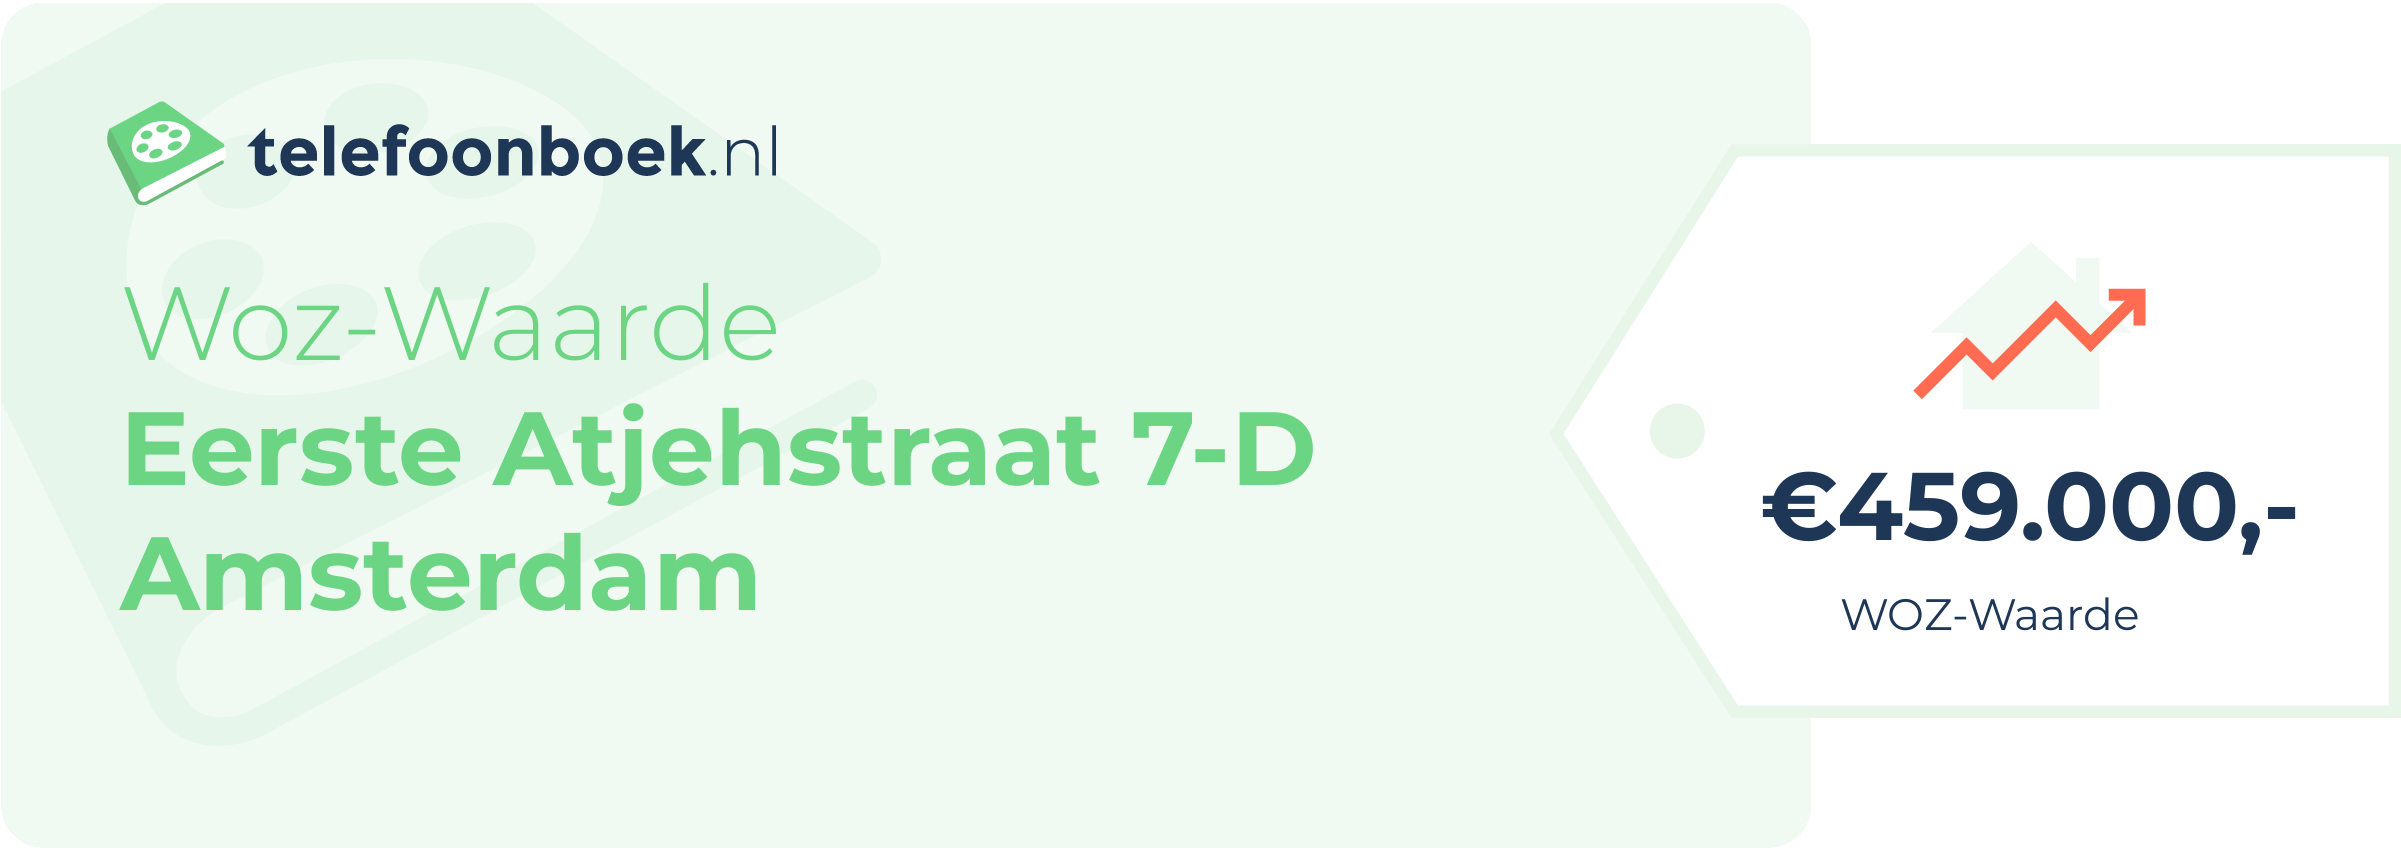 WOZ-waarde Eerste Atjehstraat 7-D Amsterdam